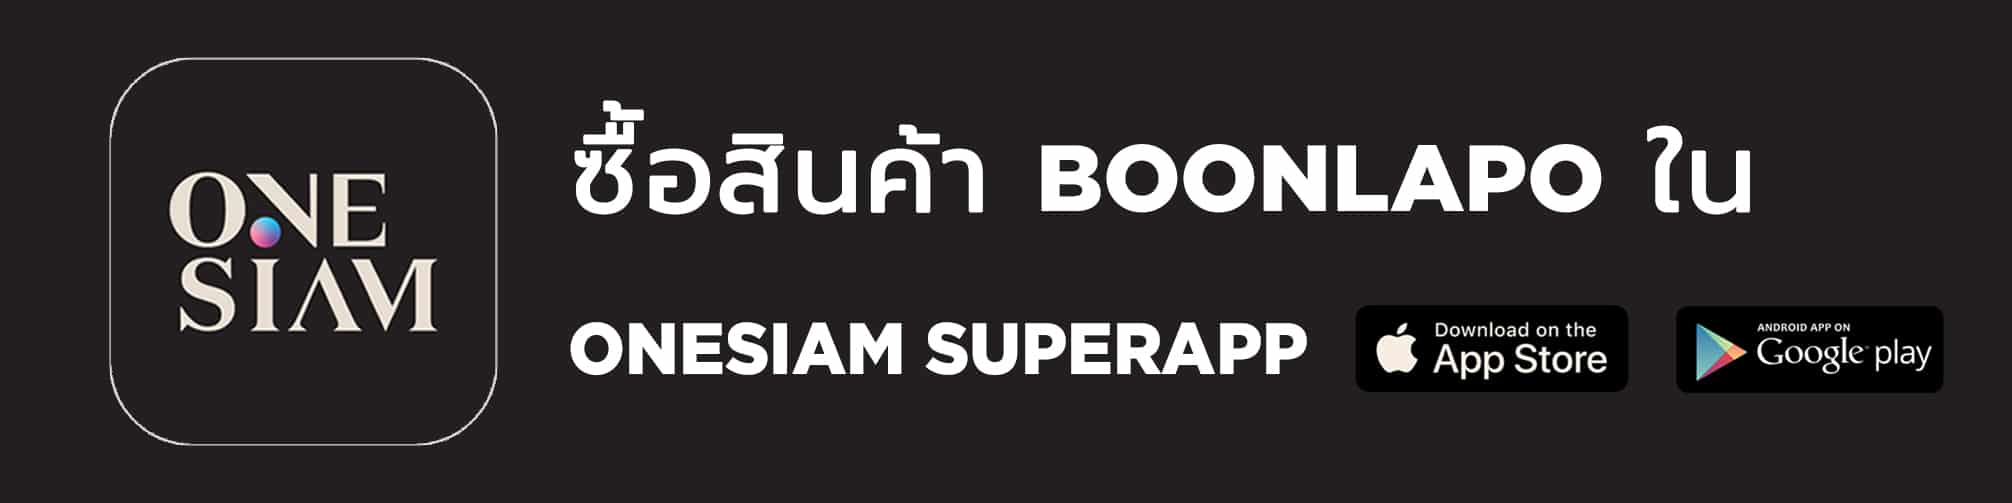 B&O Banner for Boonlapo Website Superapp